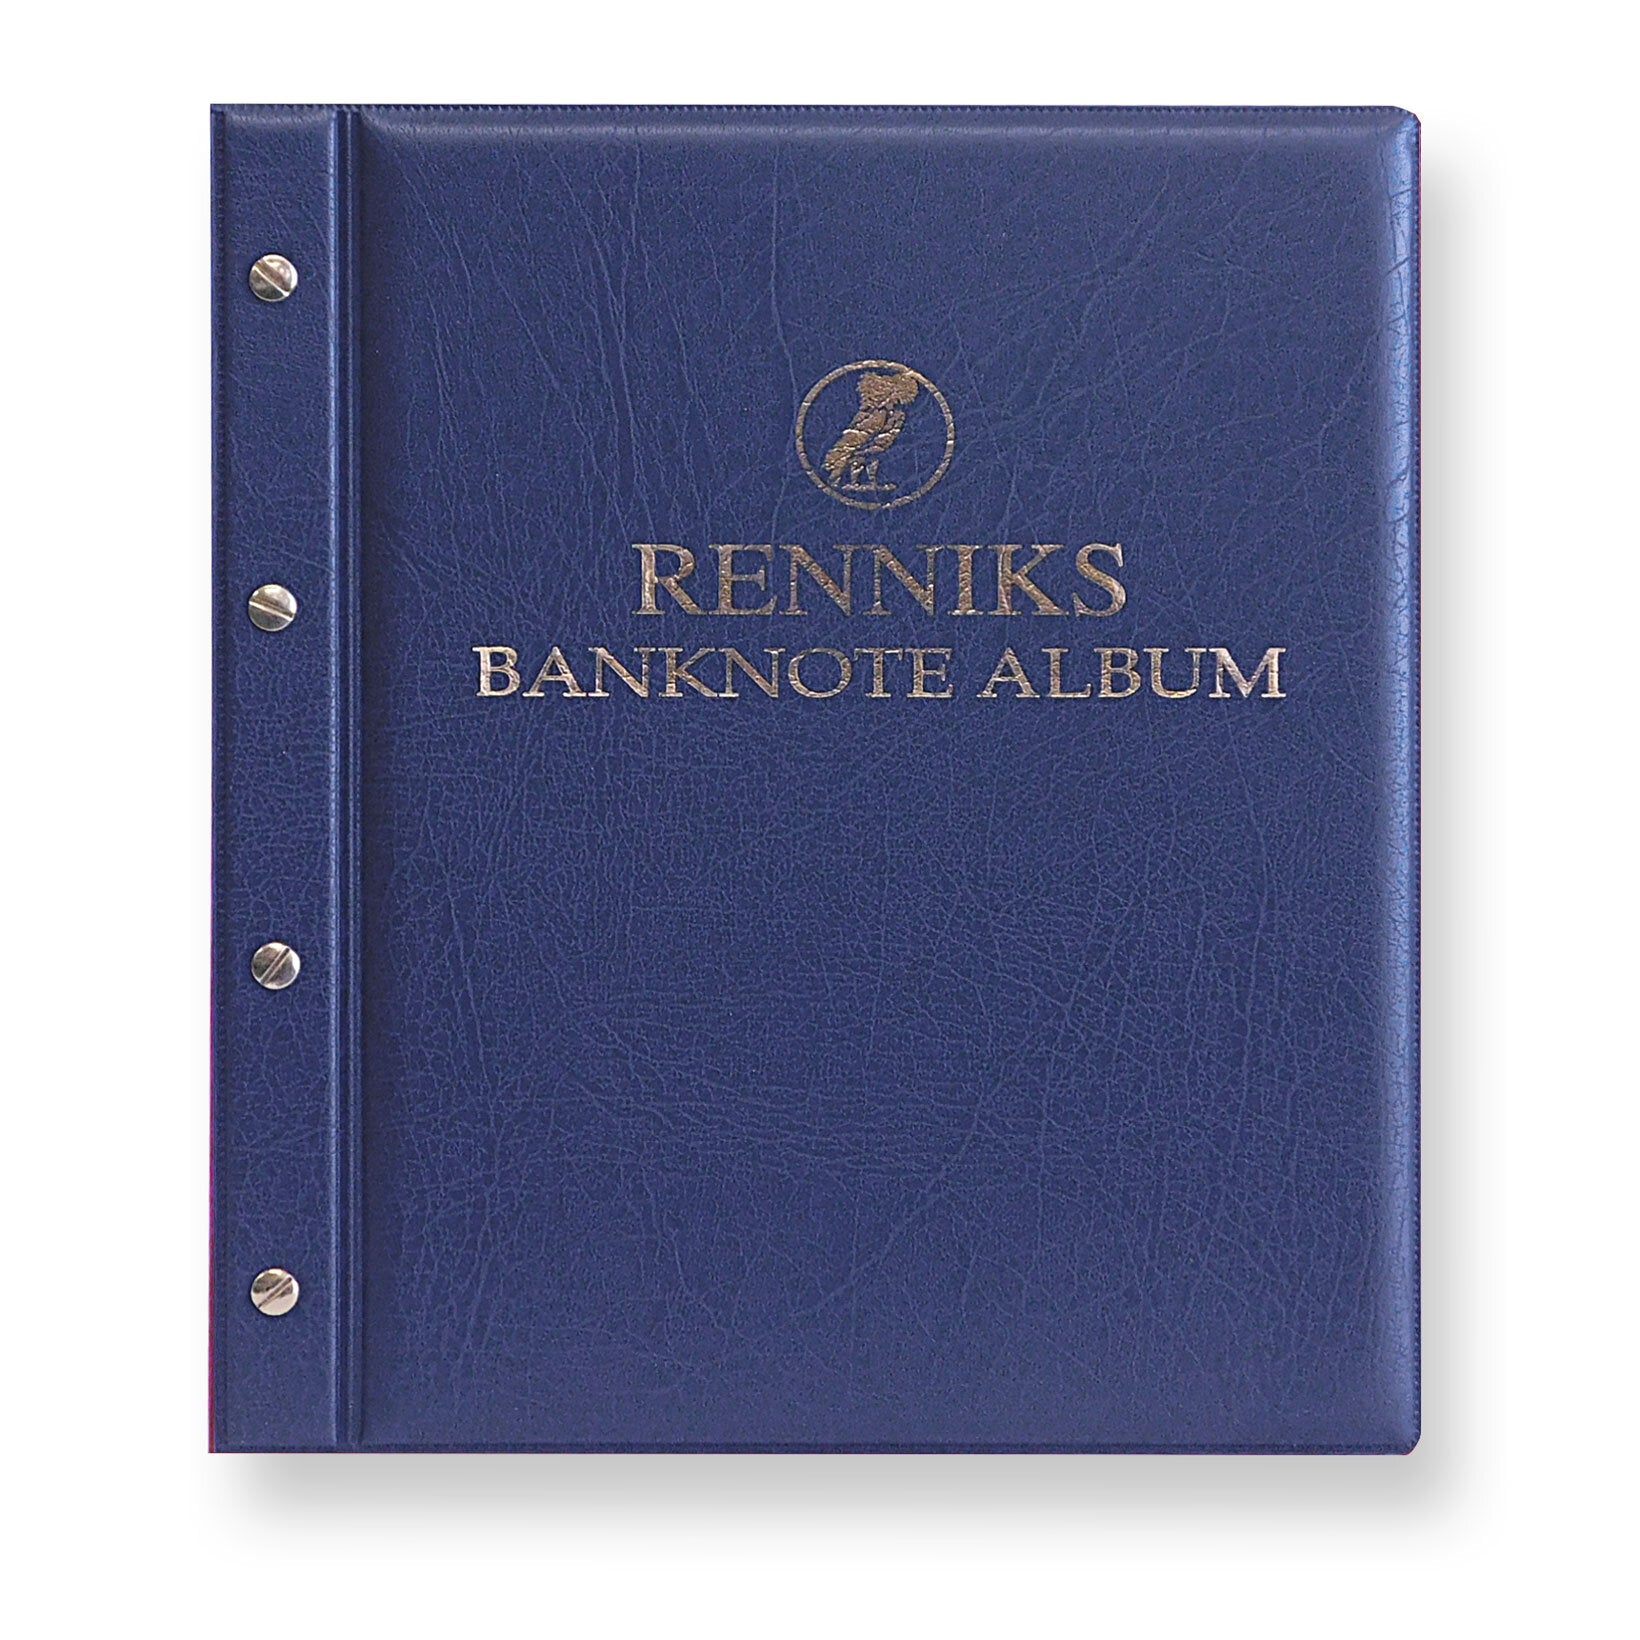 Banknote album book